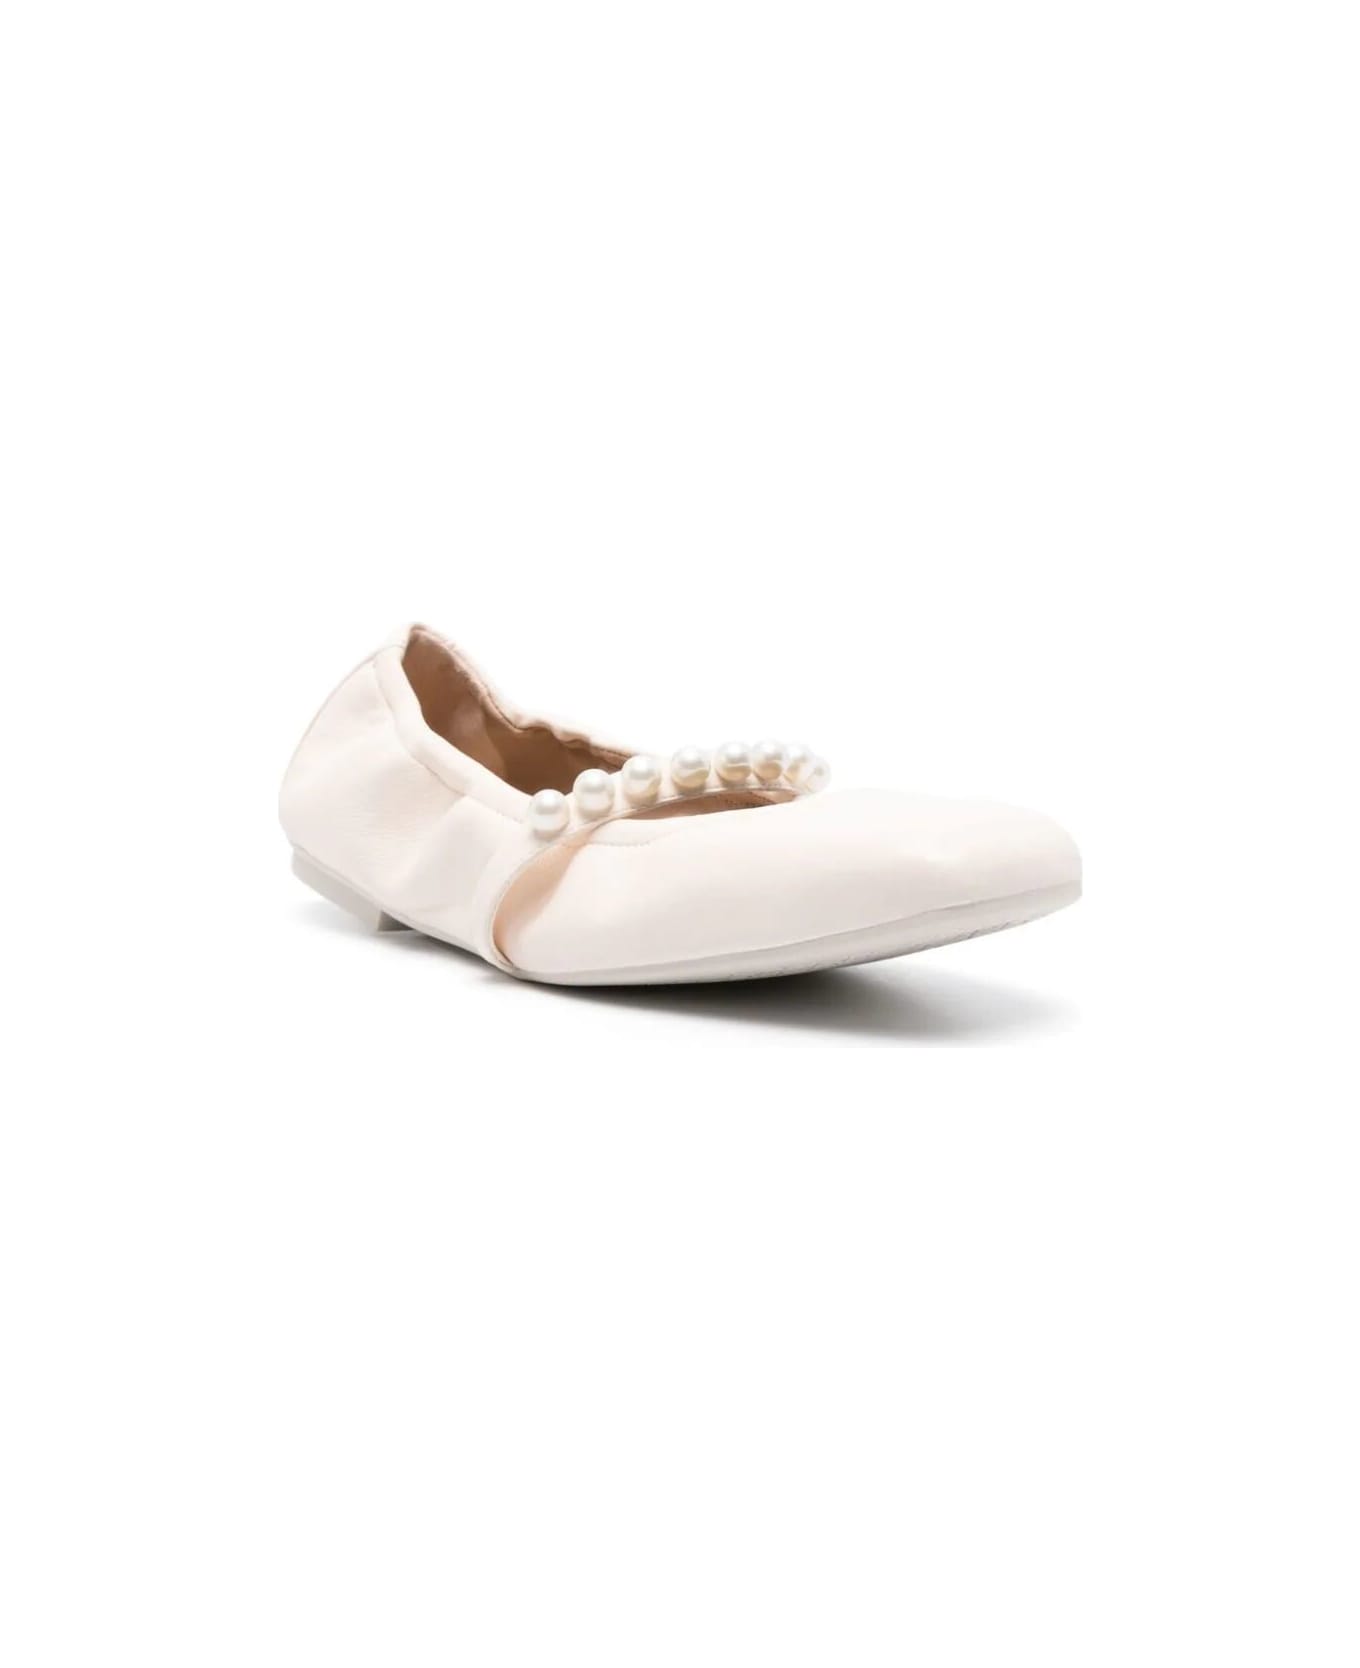 Stuart Weitzman Goldie Ballet Flat - Seashell